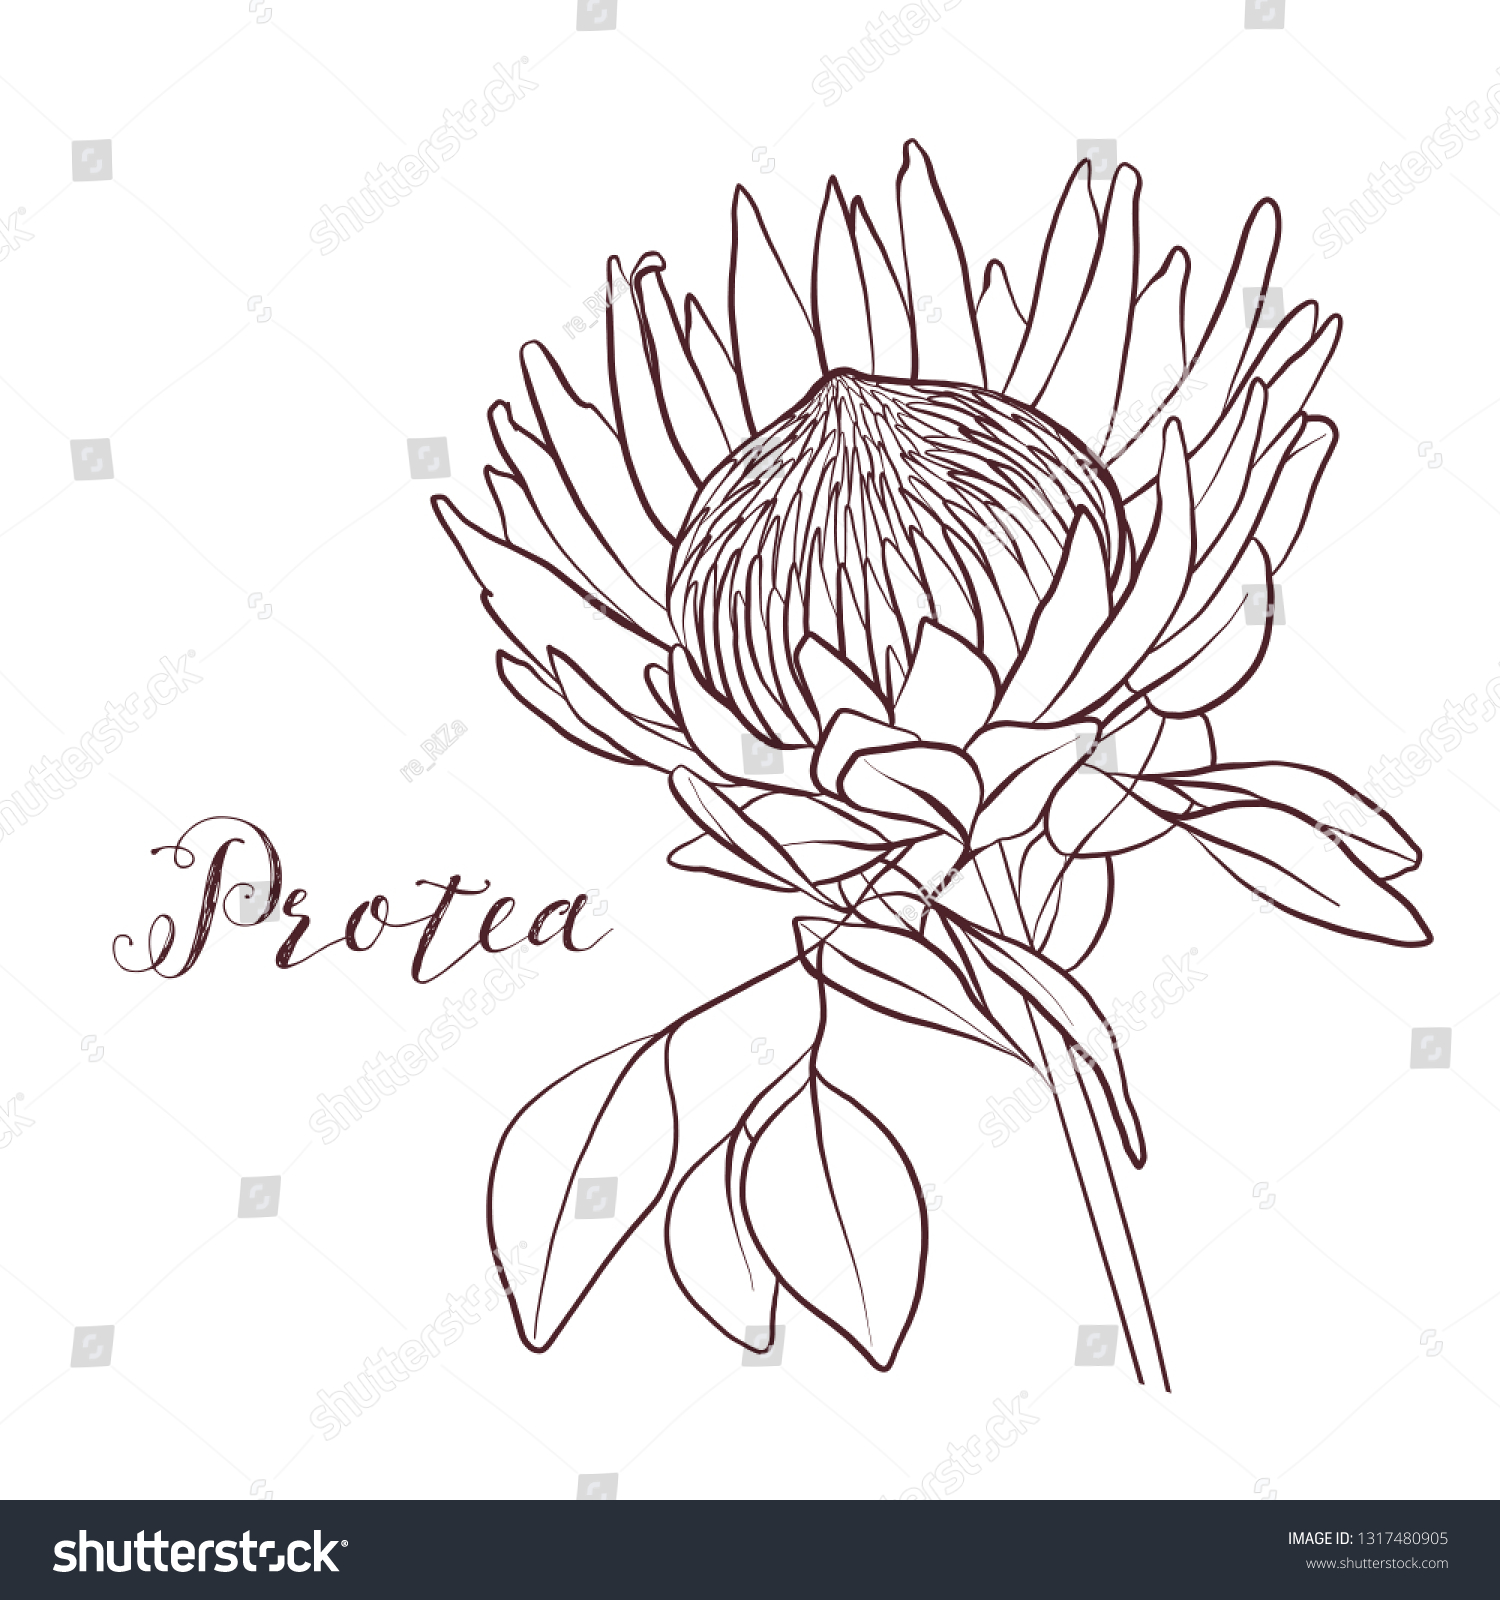 Protea Monochrome Botany Clipart On White Stock Illustration 1317480905 ...